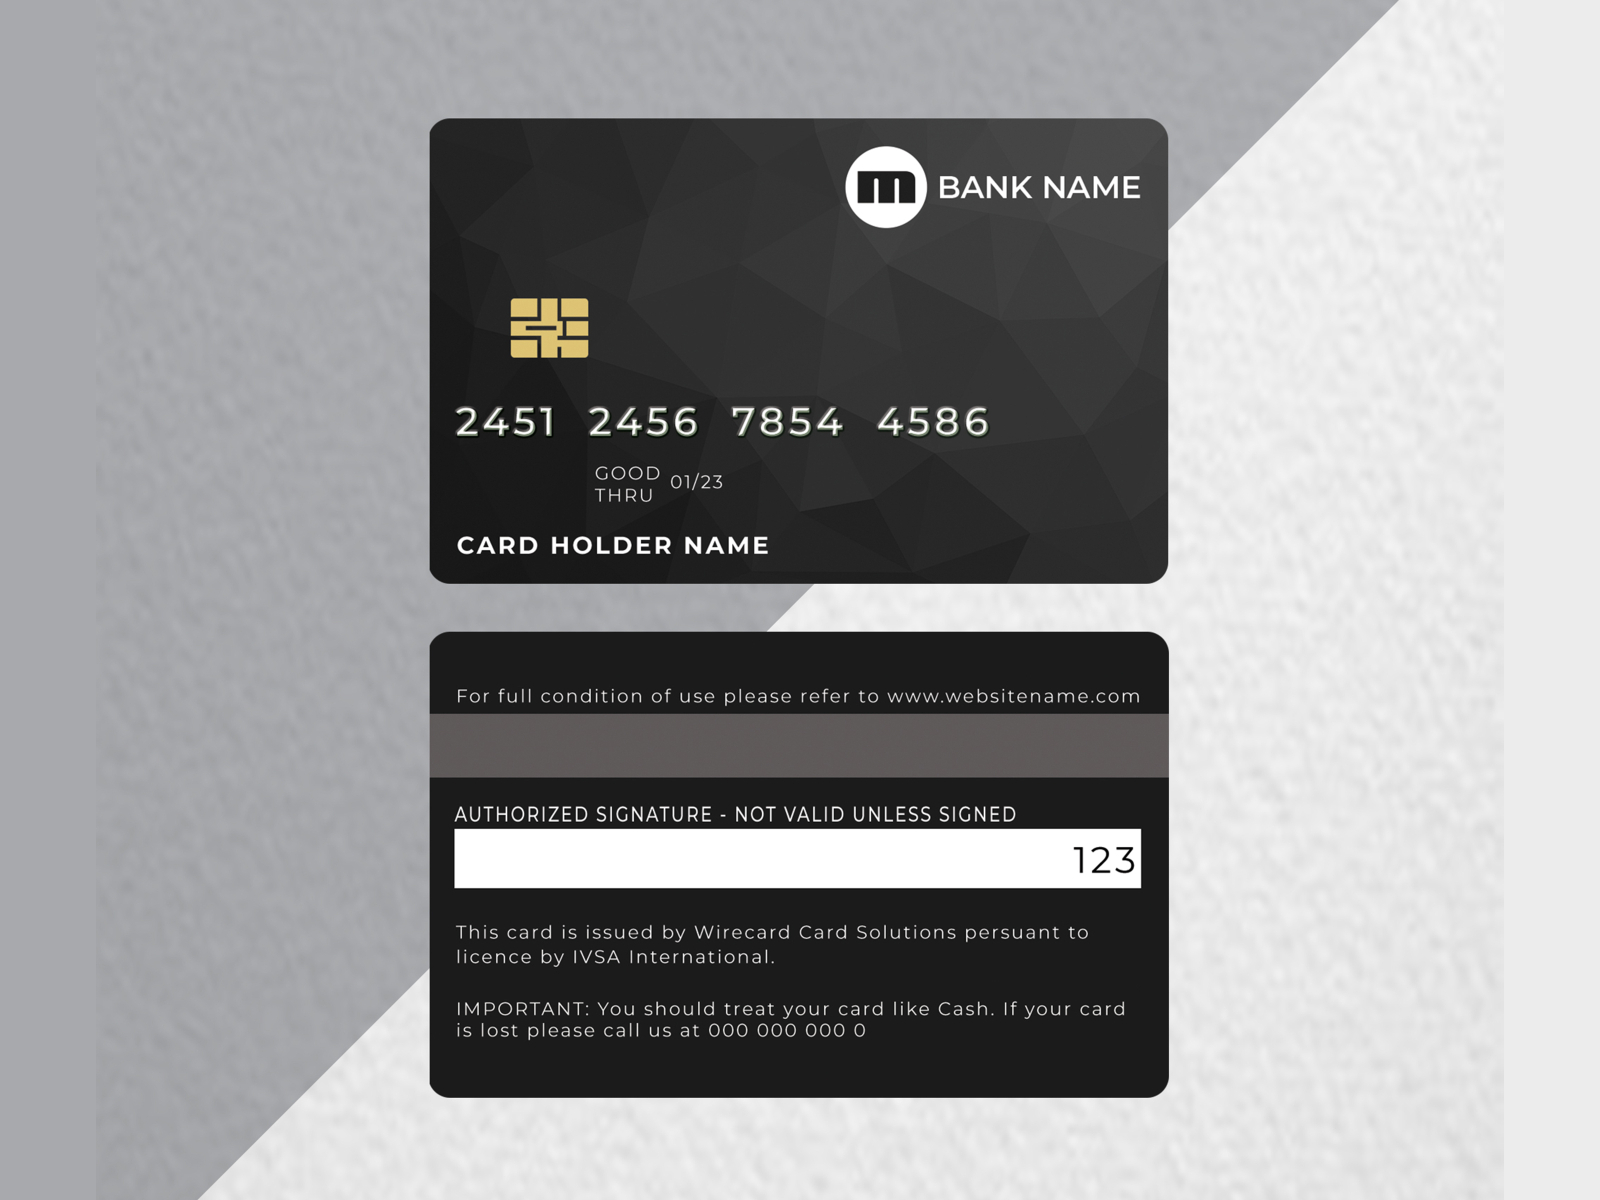 Credit / Debit Card Design by Silvi Jannat on Dribbble